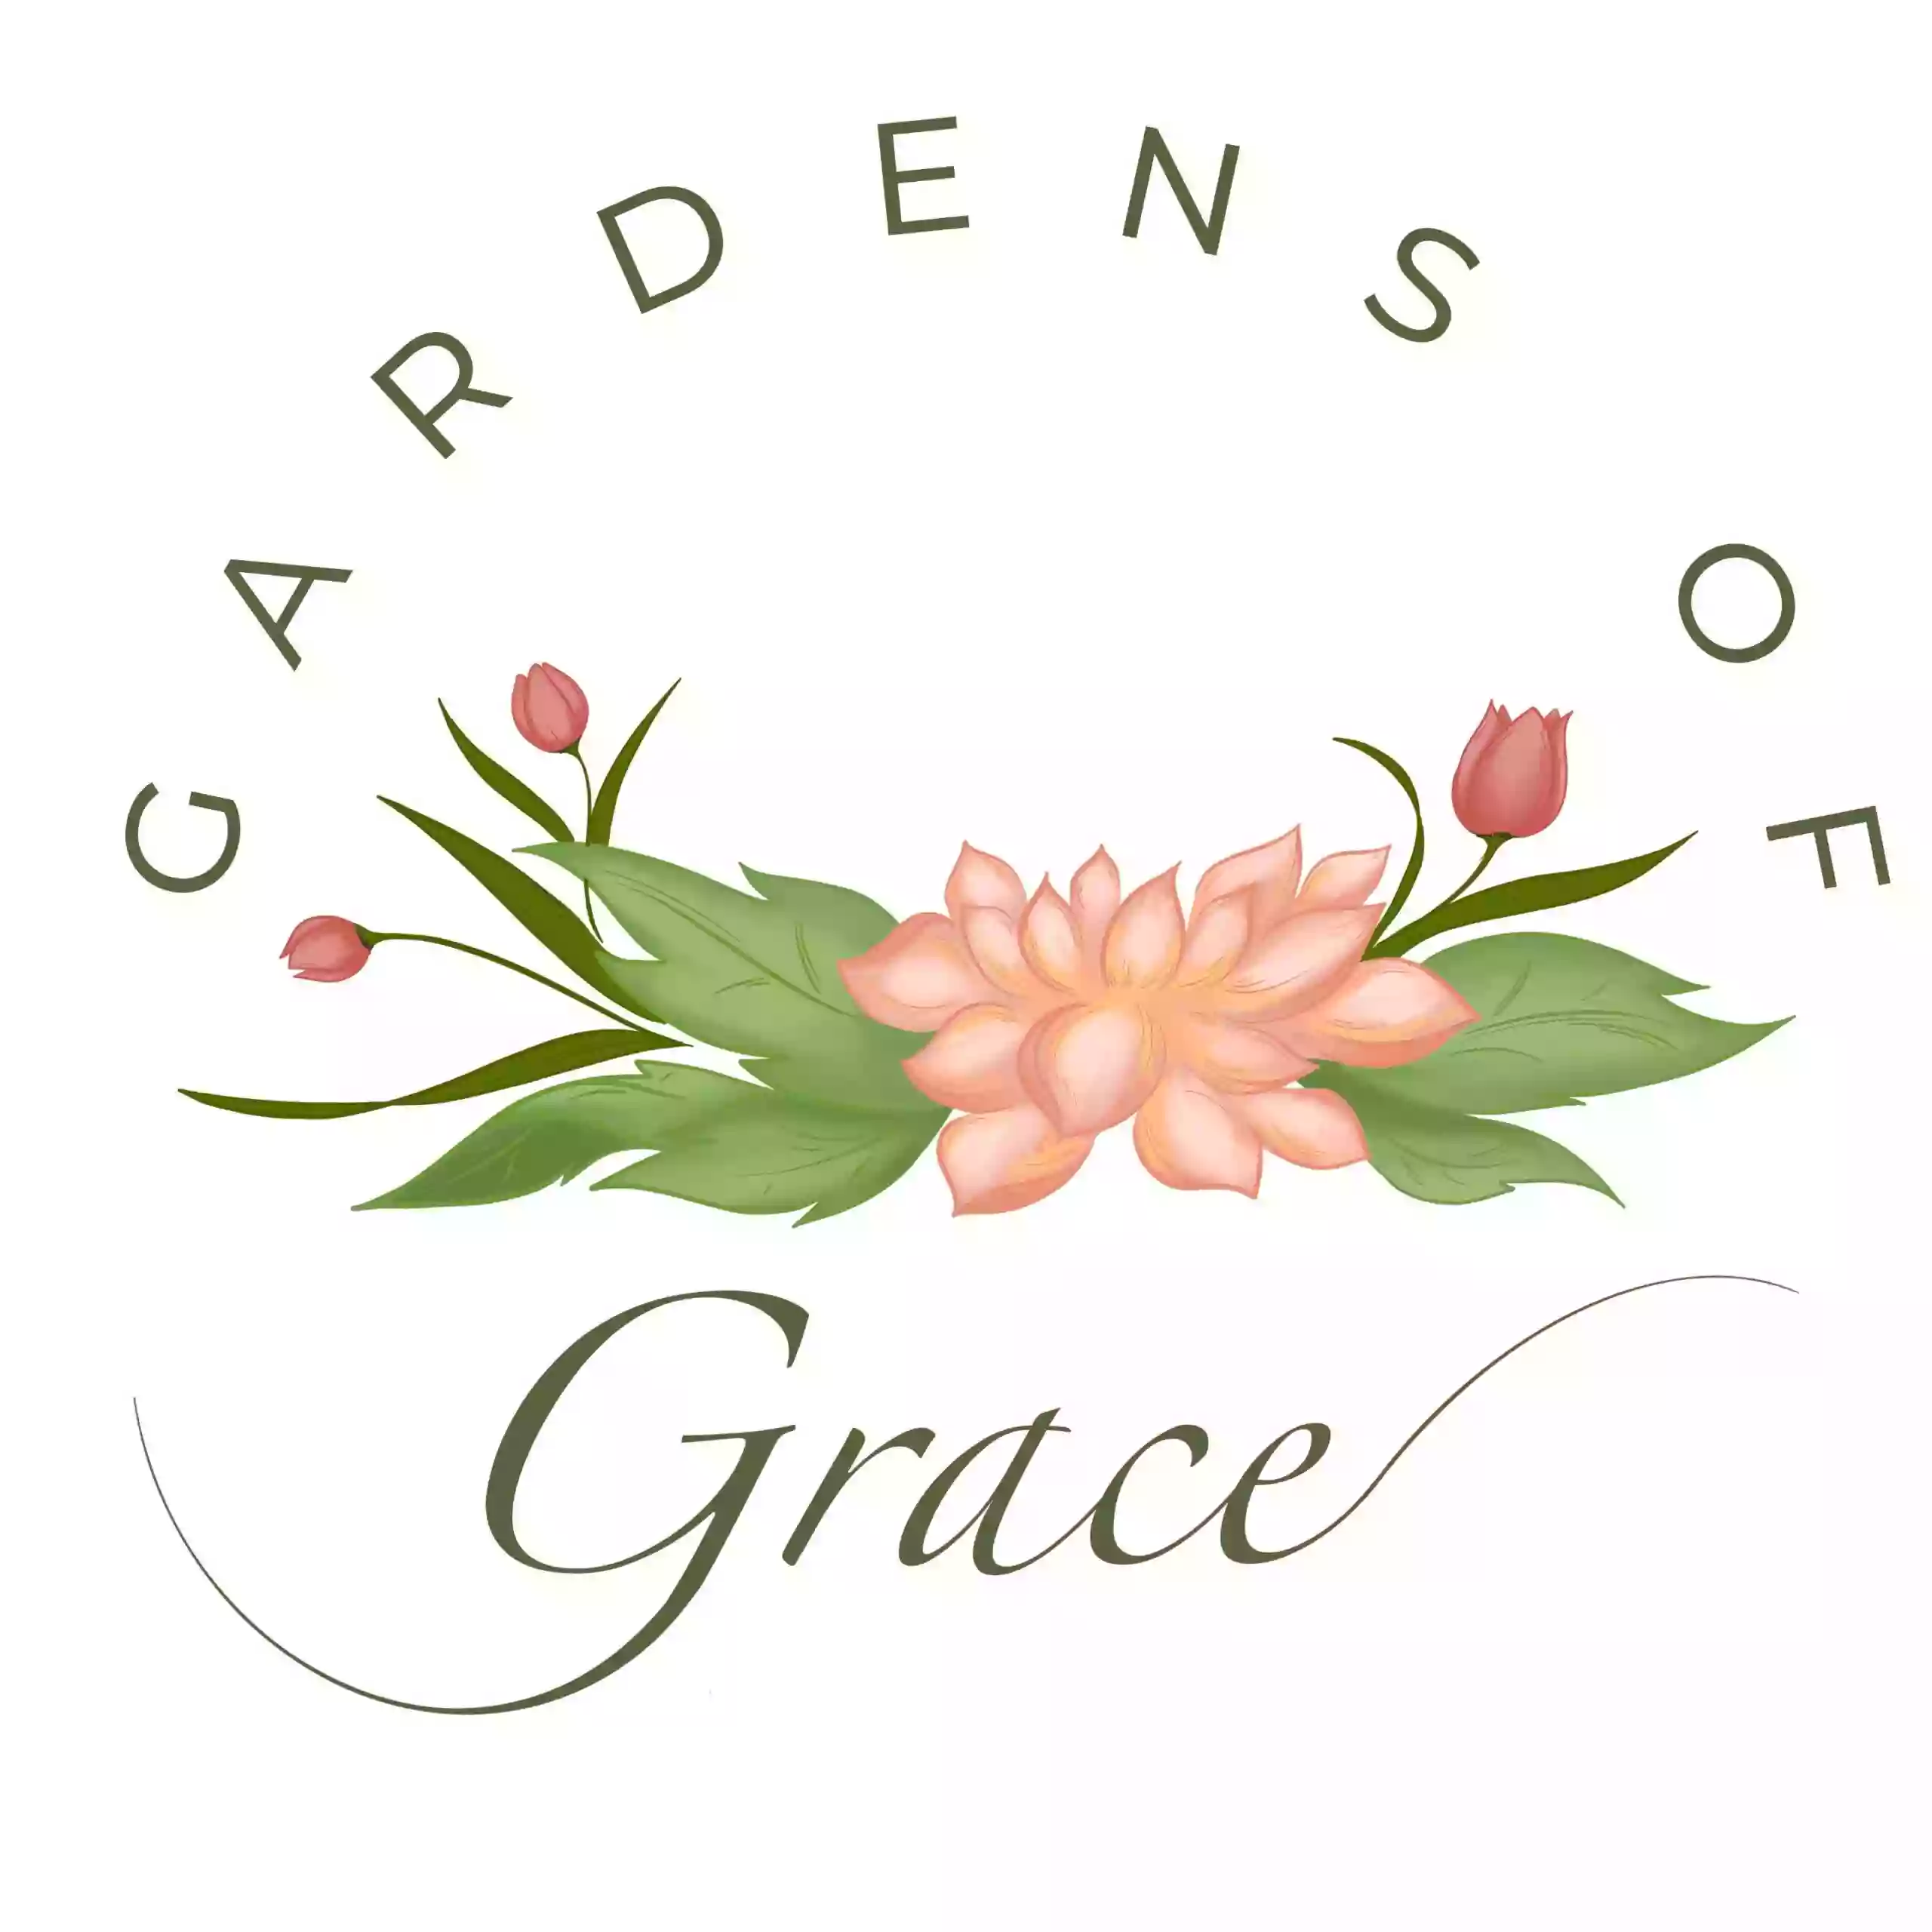 Gardens of Grace